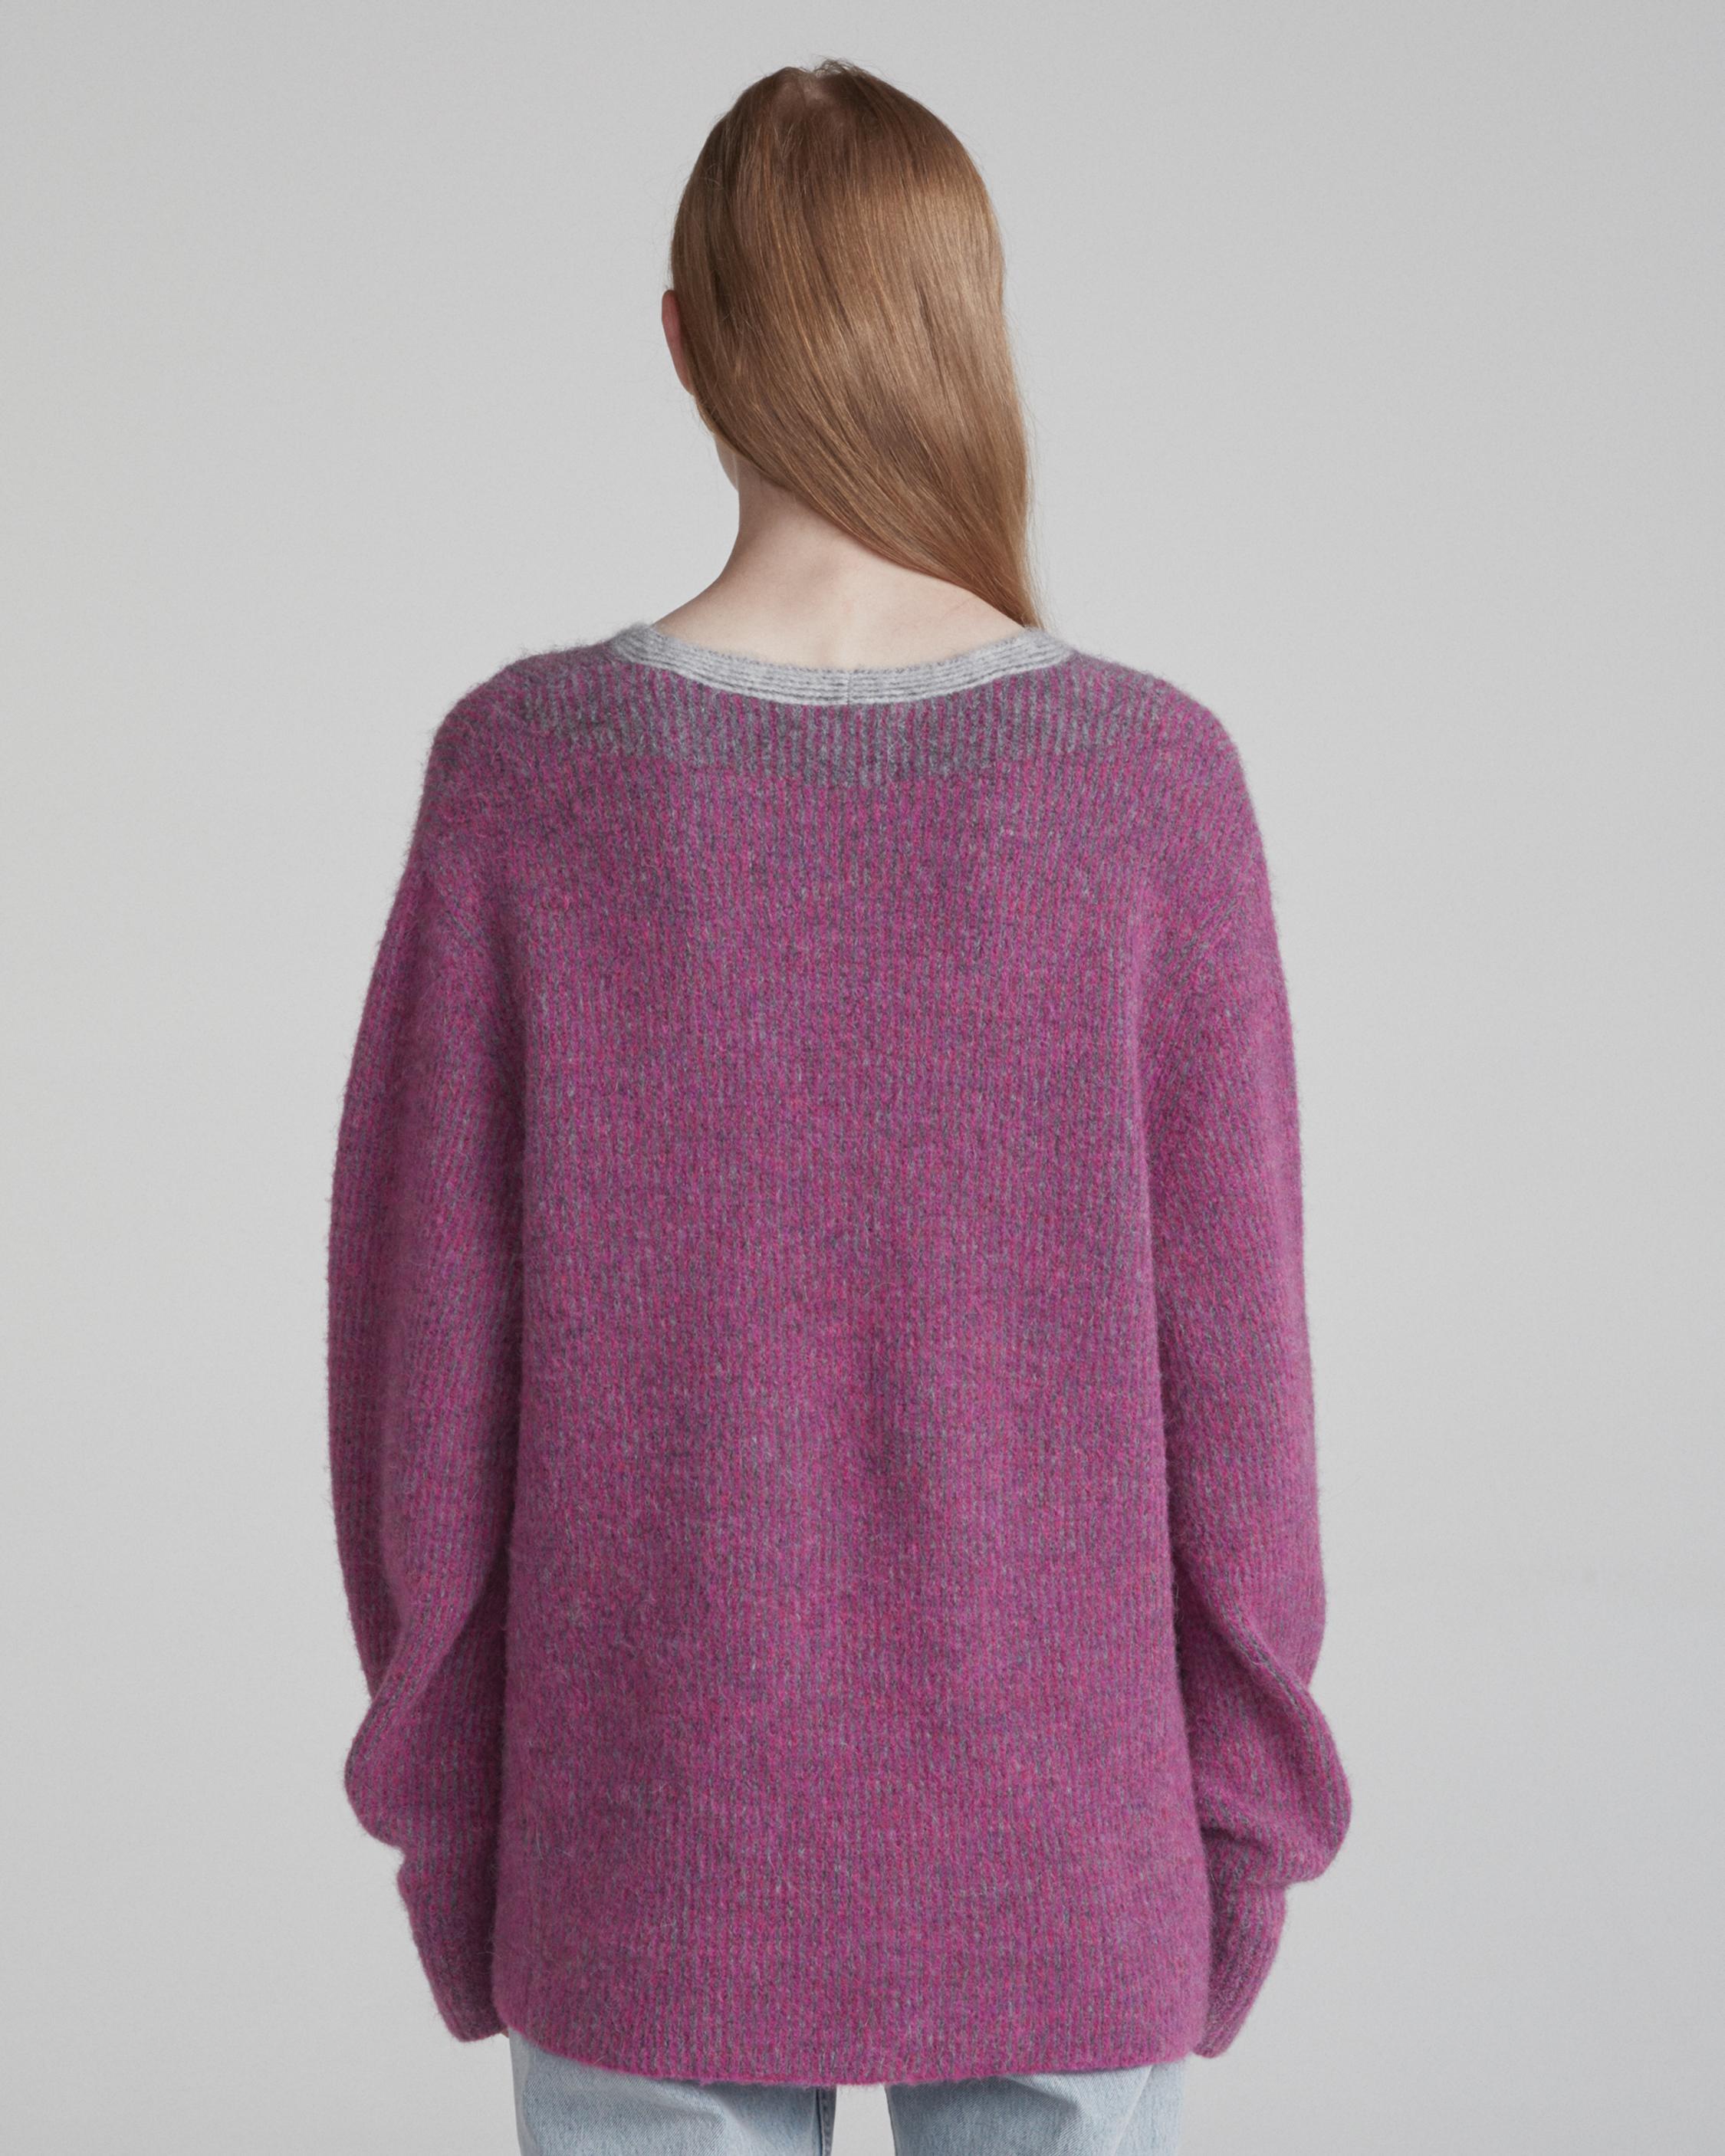 Lyst - Rag & Bone Jonie V-neck Pullover Sweater in Purple - Save 41%